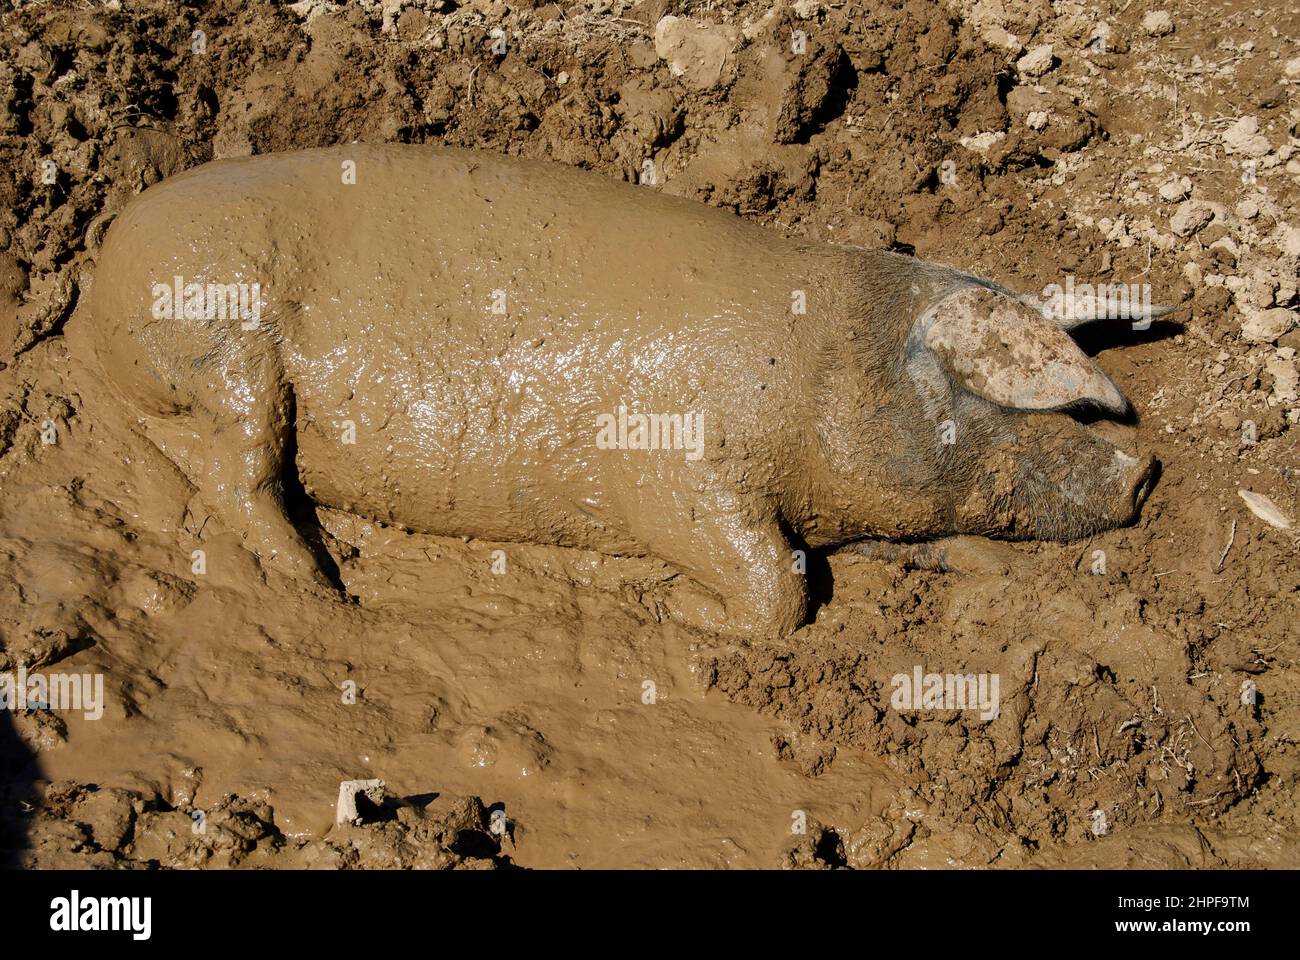 Pig sleeping in the mud Stock Photo